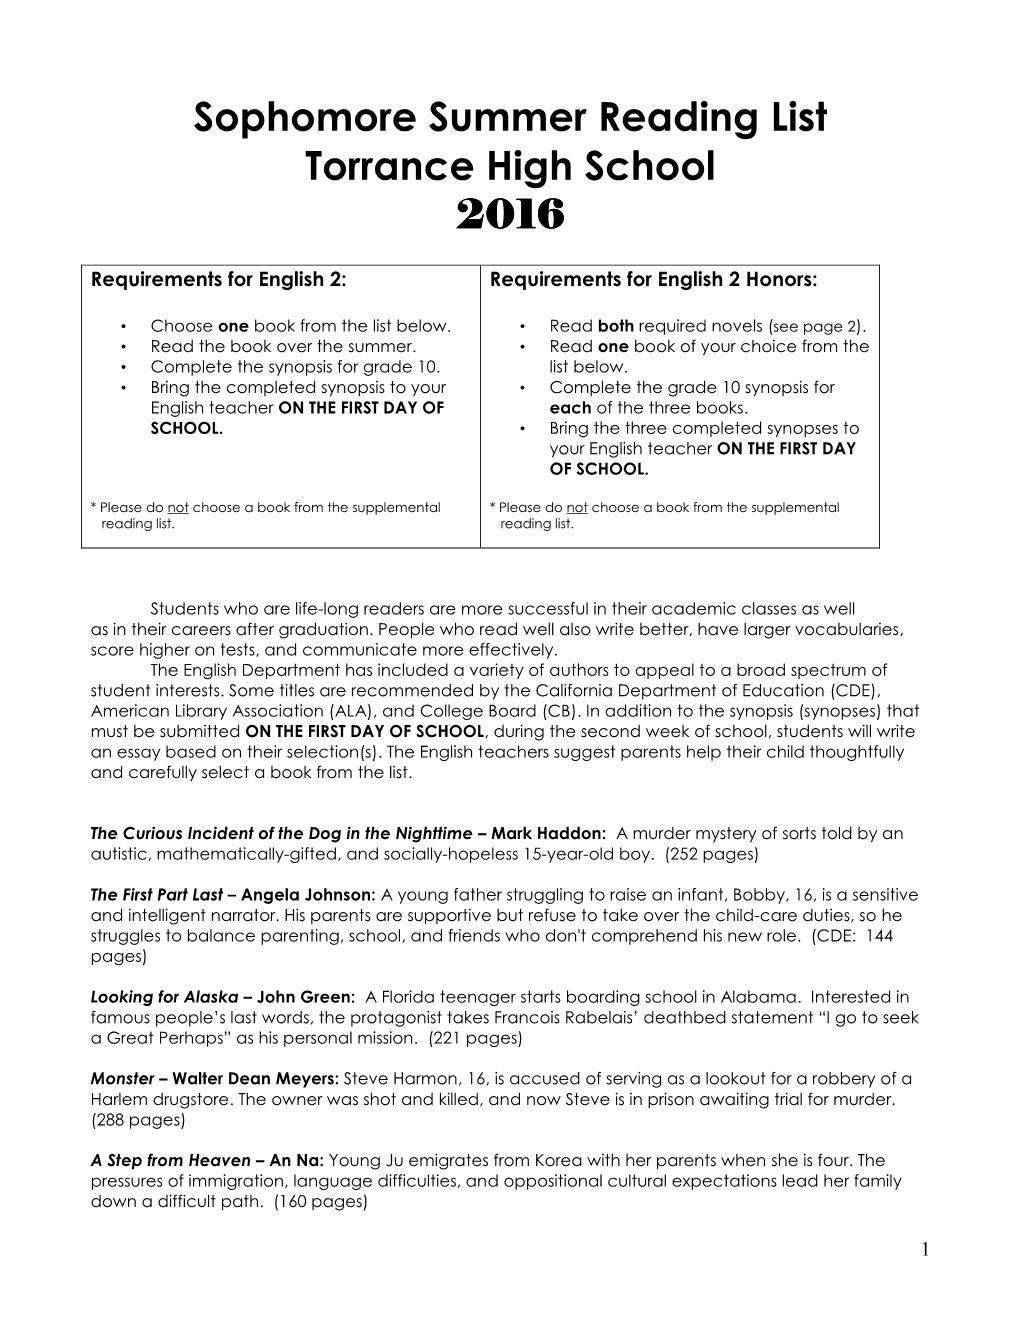 Sophomore Summer Reading List Torrance High School 2016